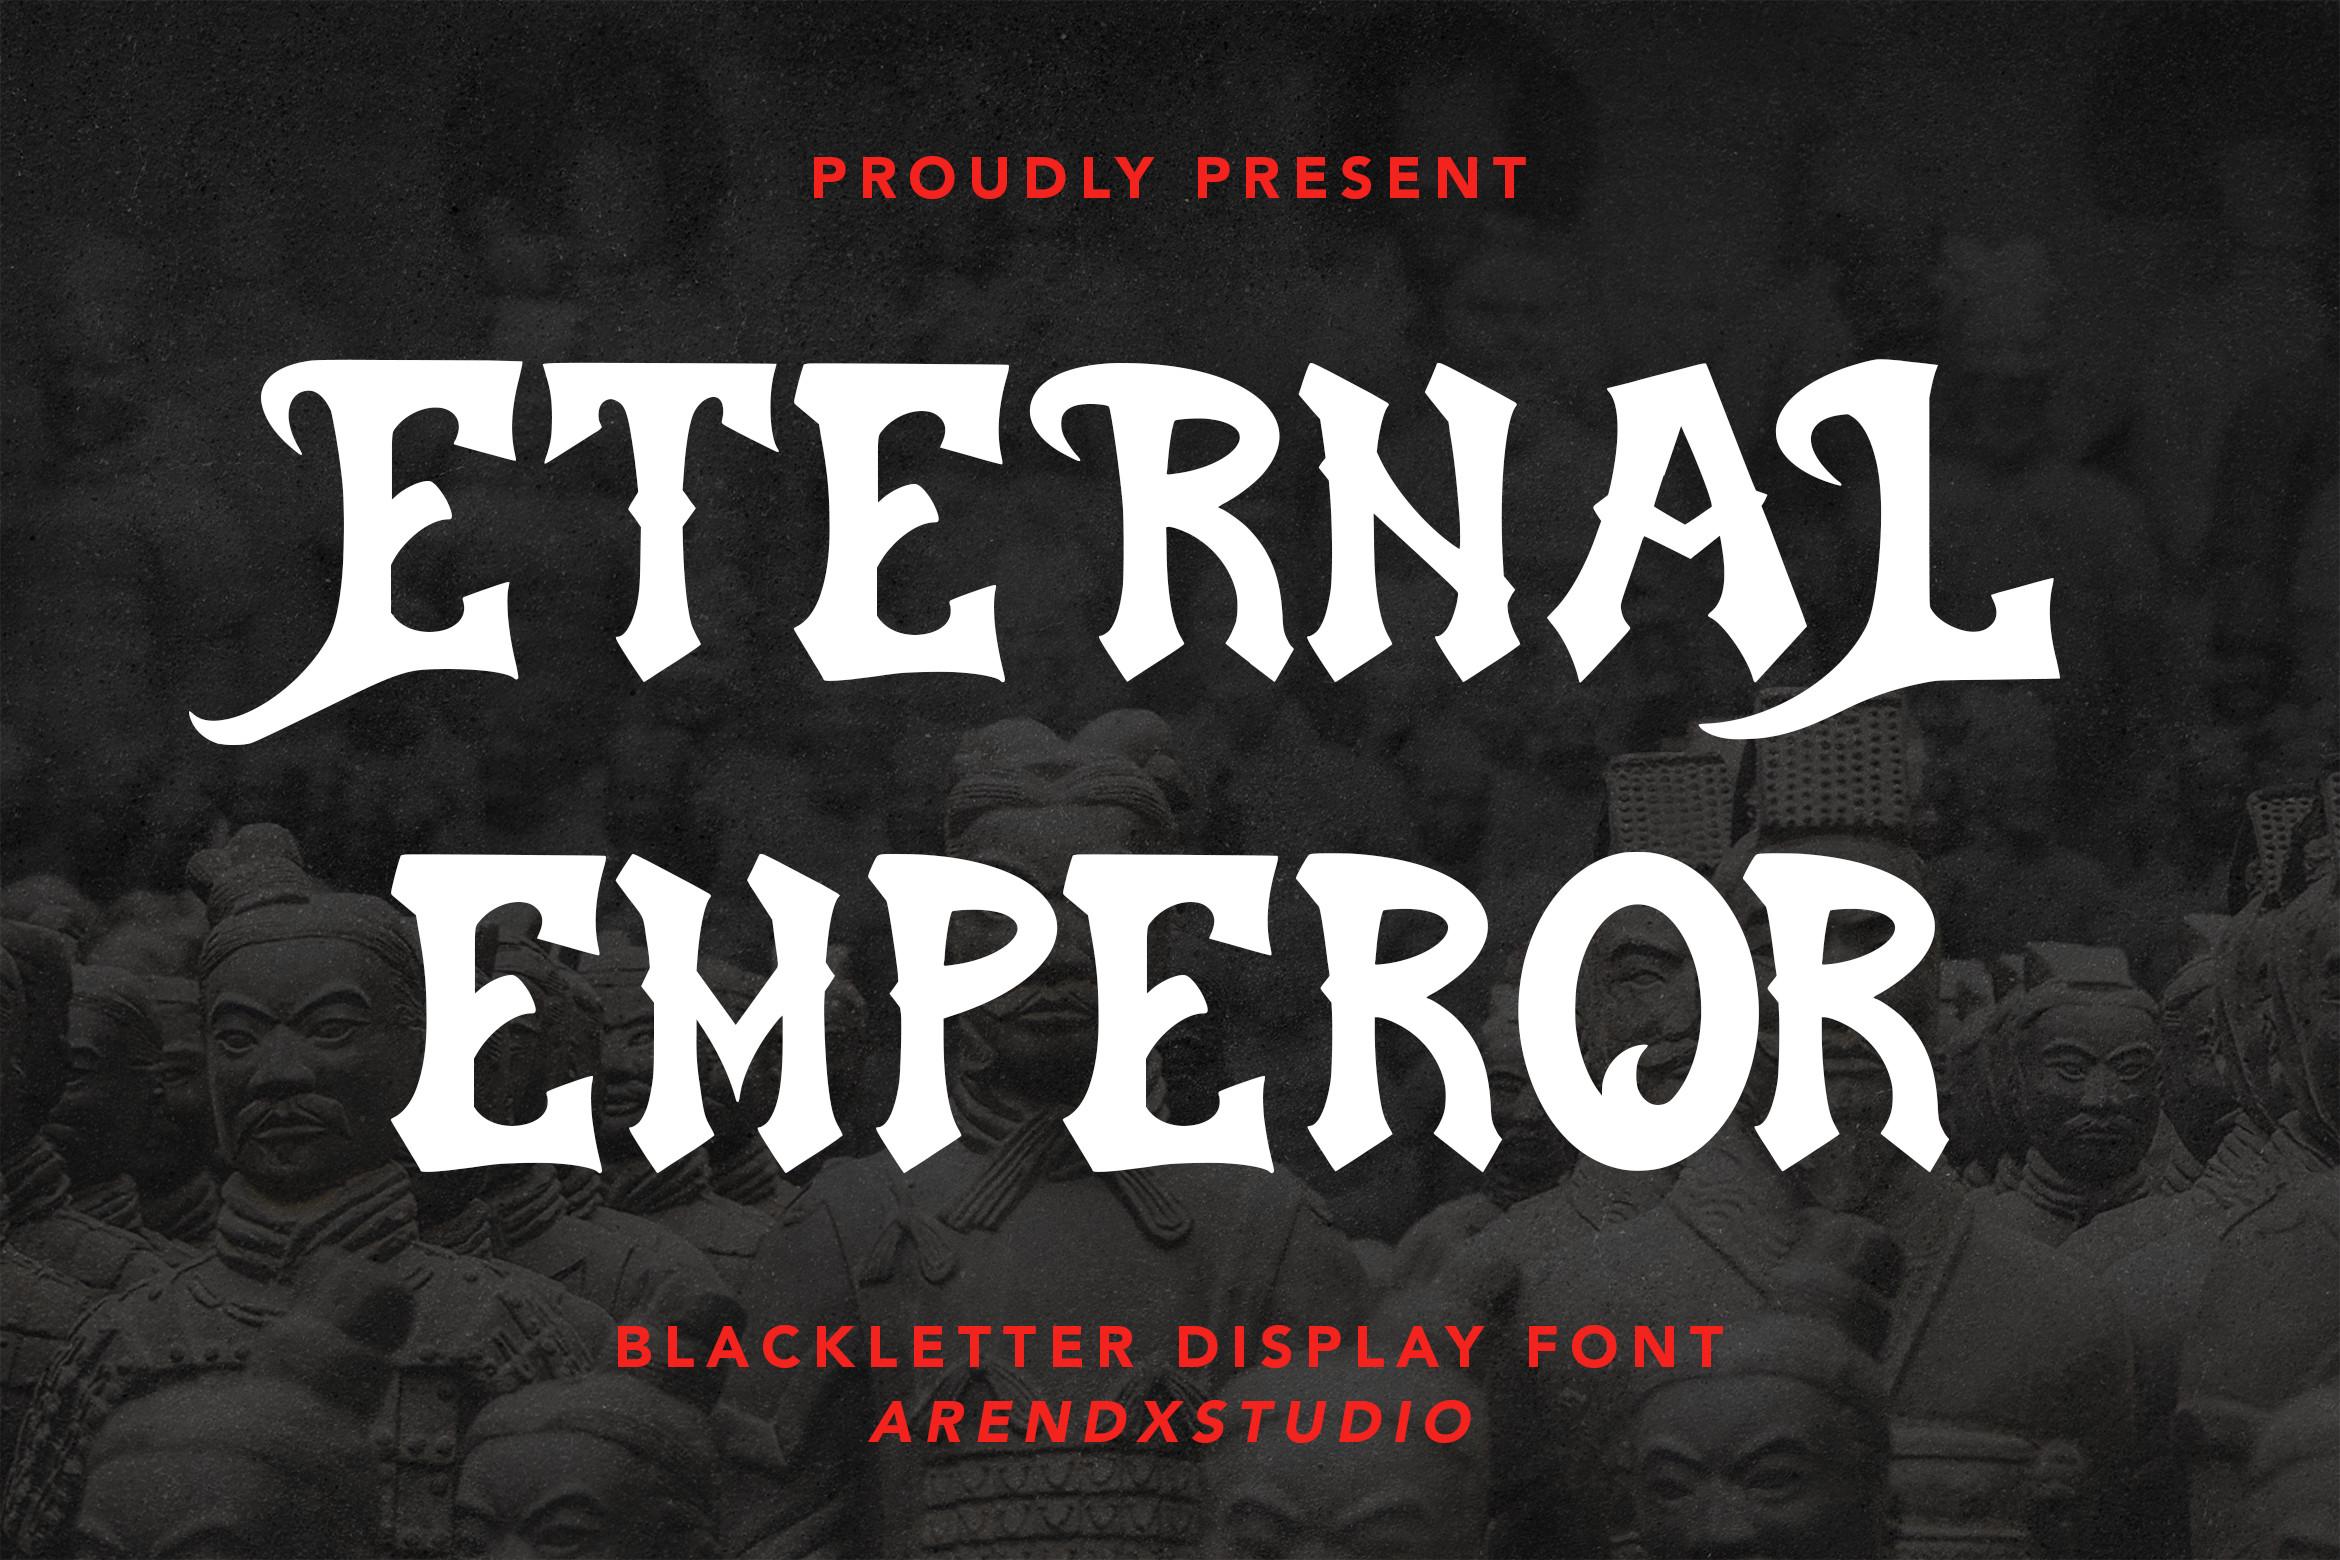 Eternal Emperor Font